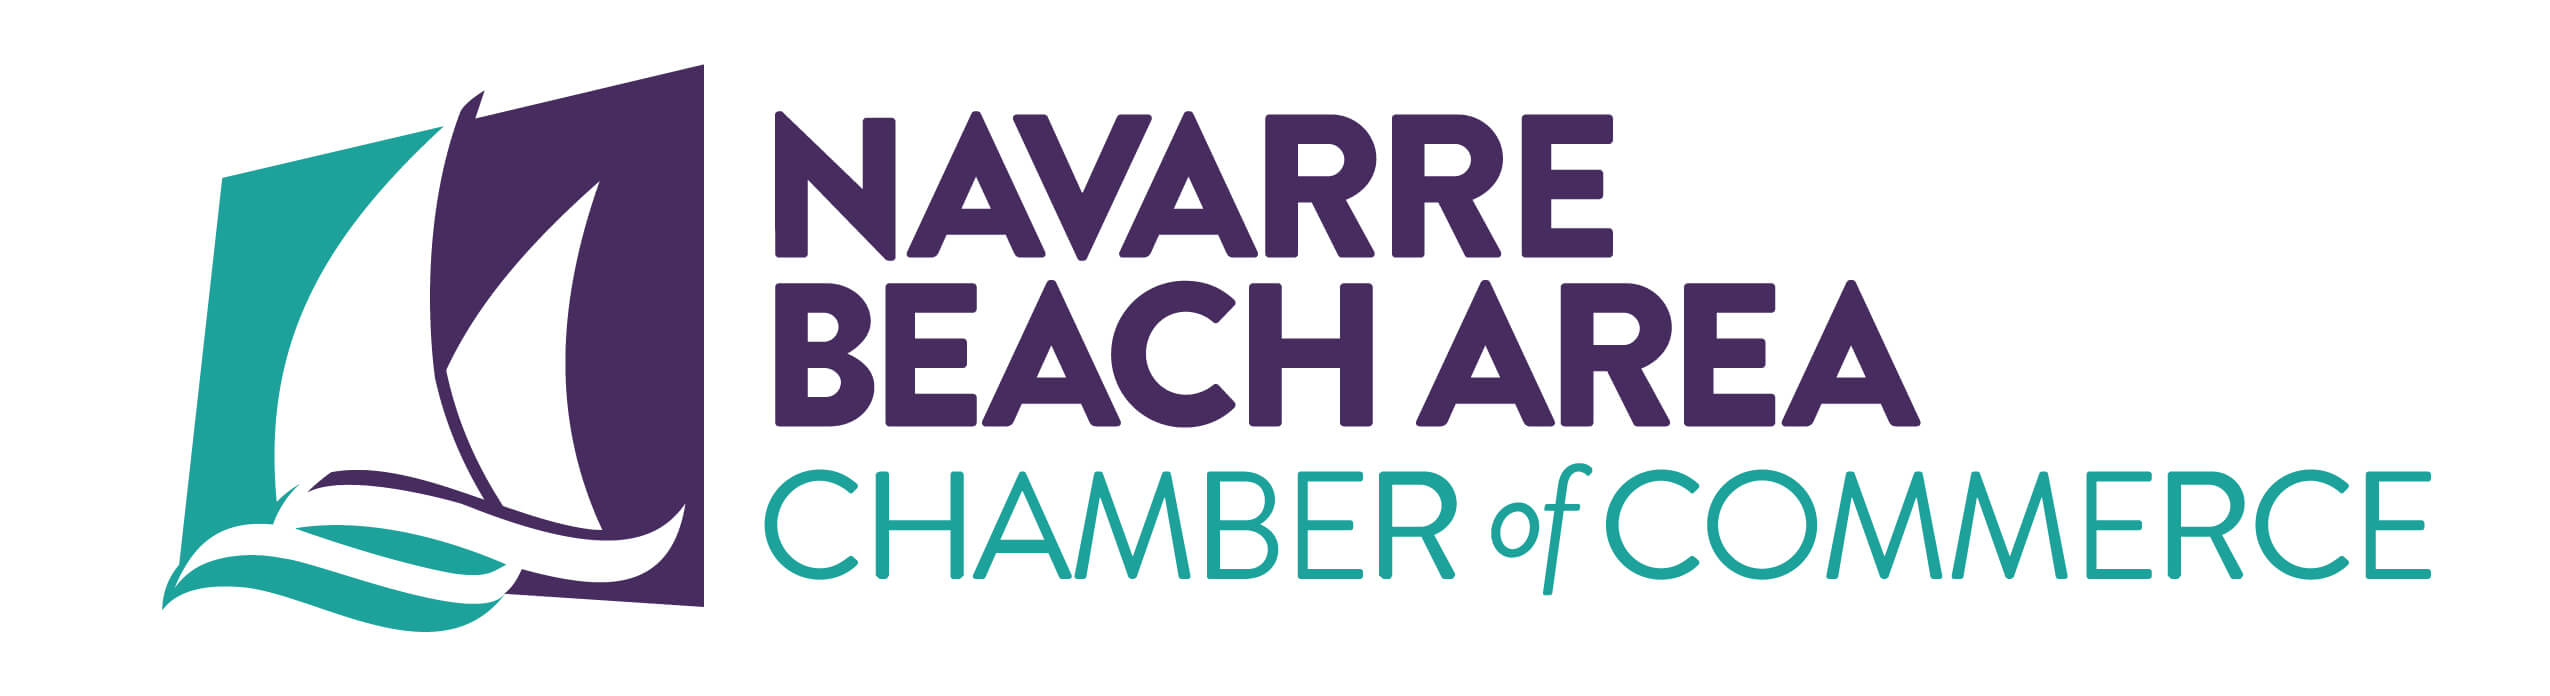 Navarre Beach Area Chamber of Commerce Logo